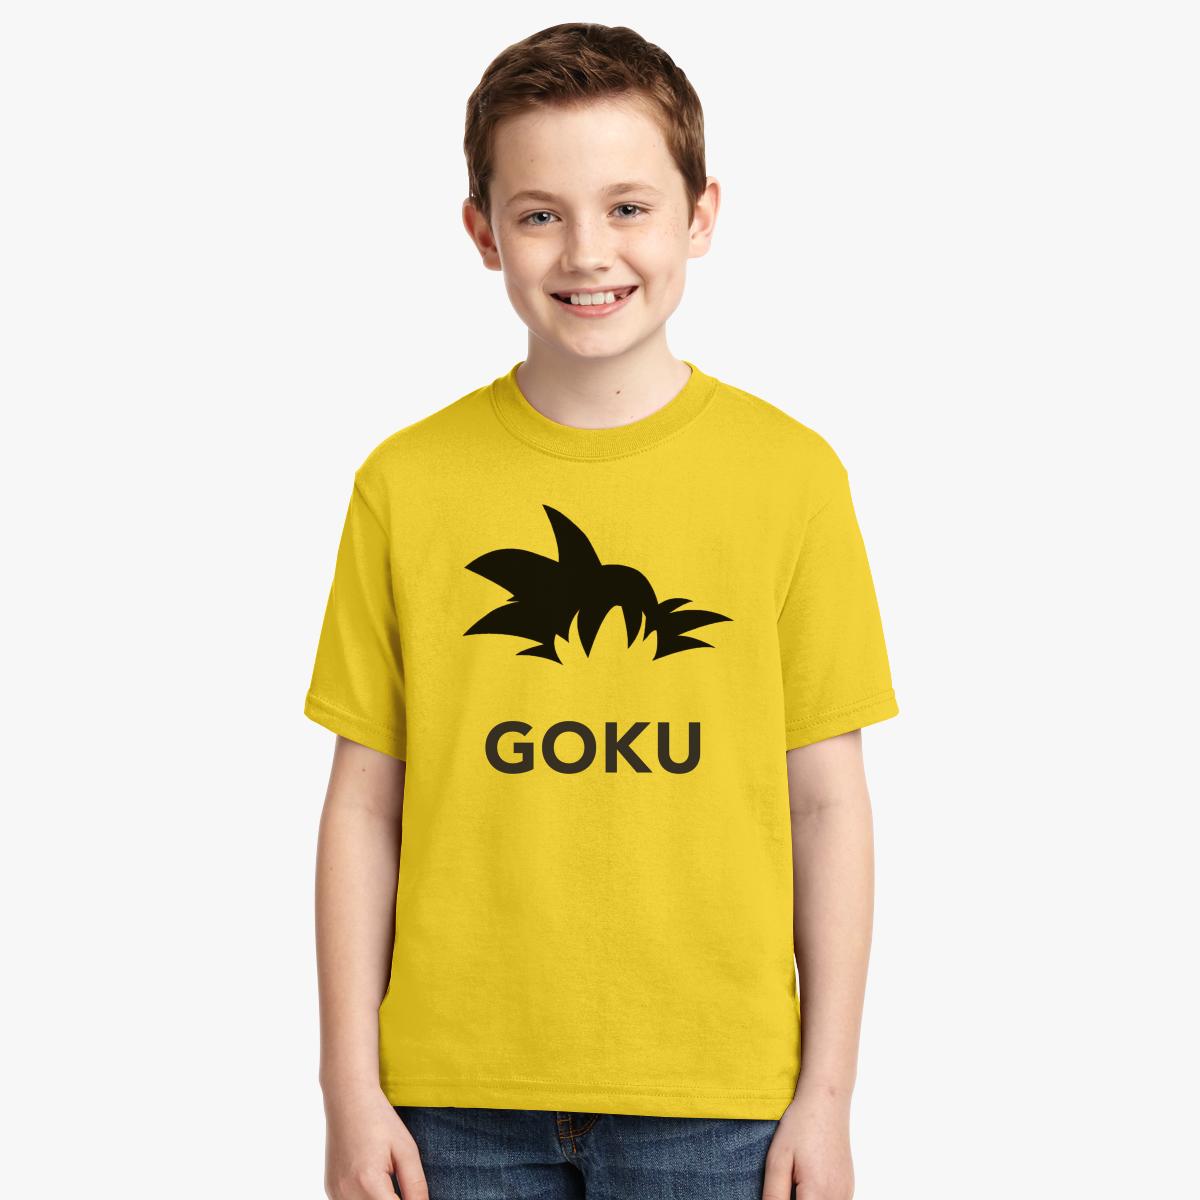 Roblox Goku T Shirt Free Buyudum Cocuk Oldum - thanos t shirt roblox png roblox generator script